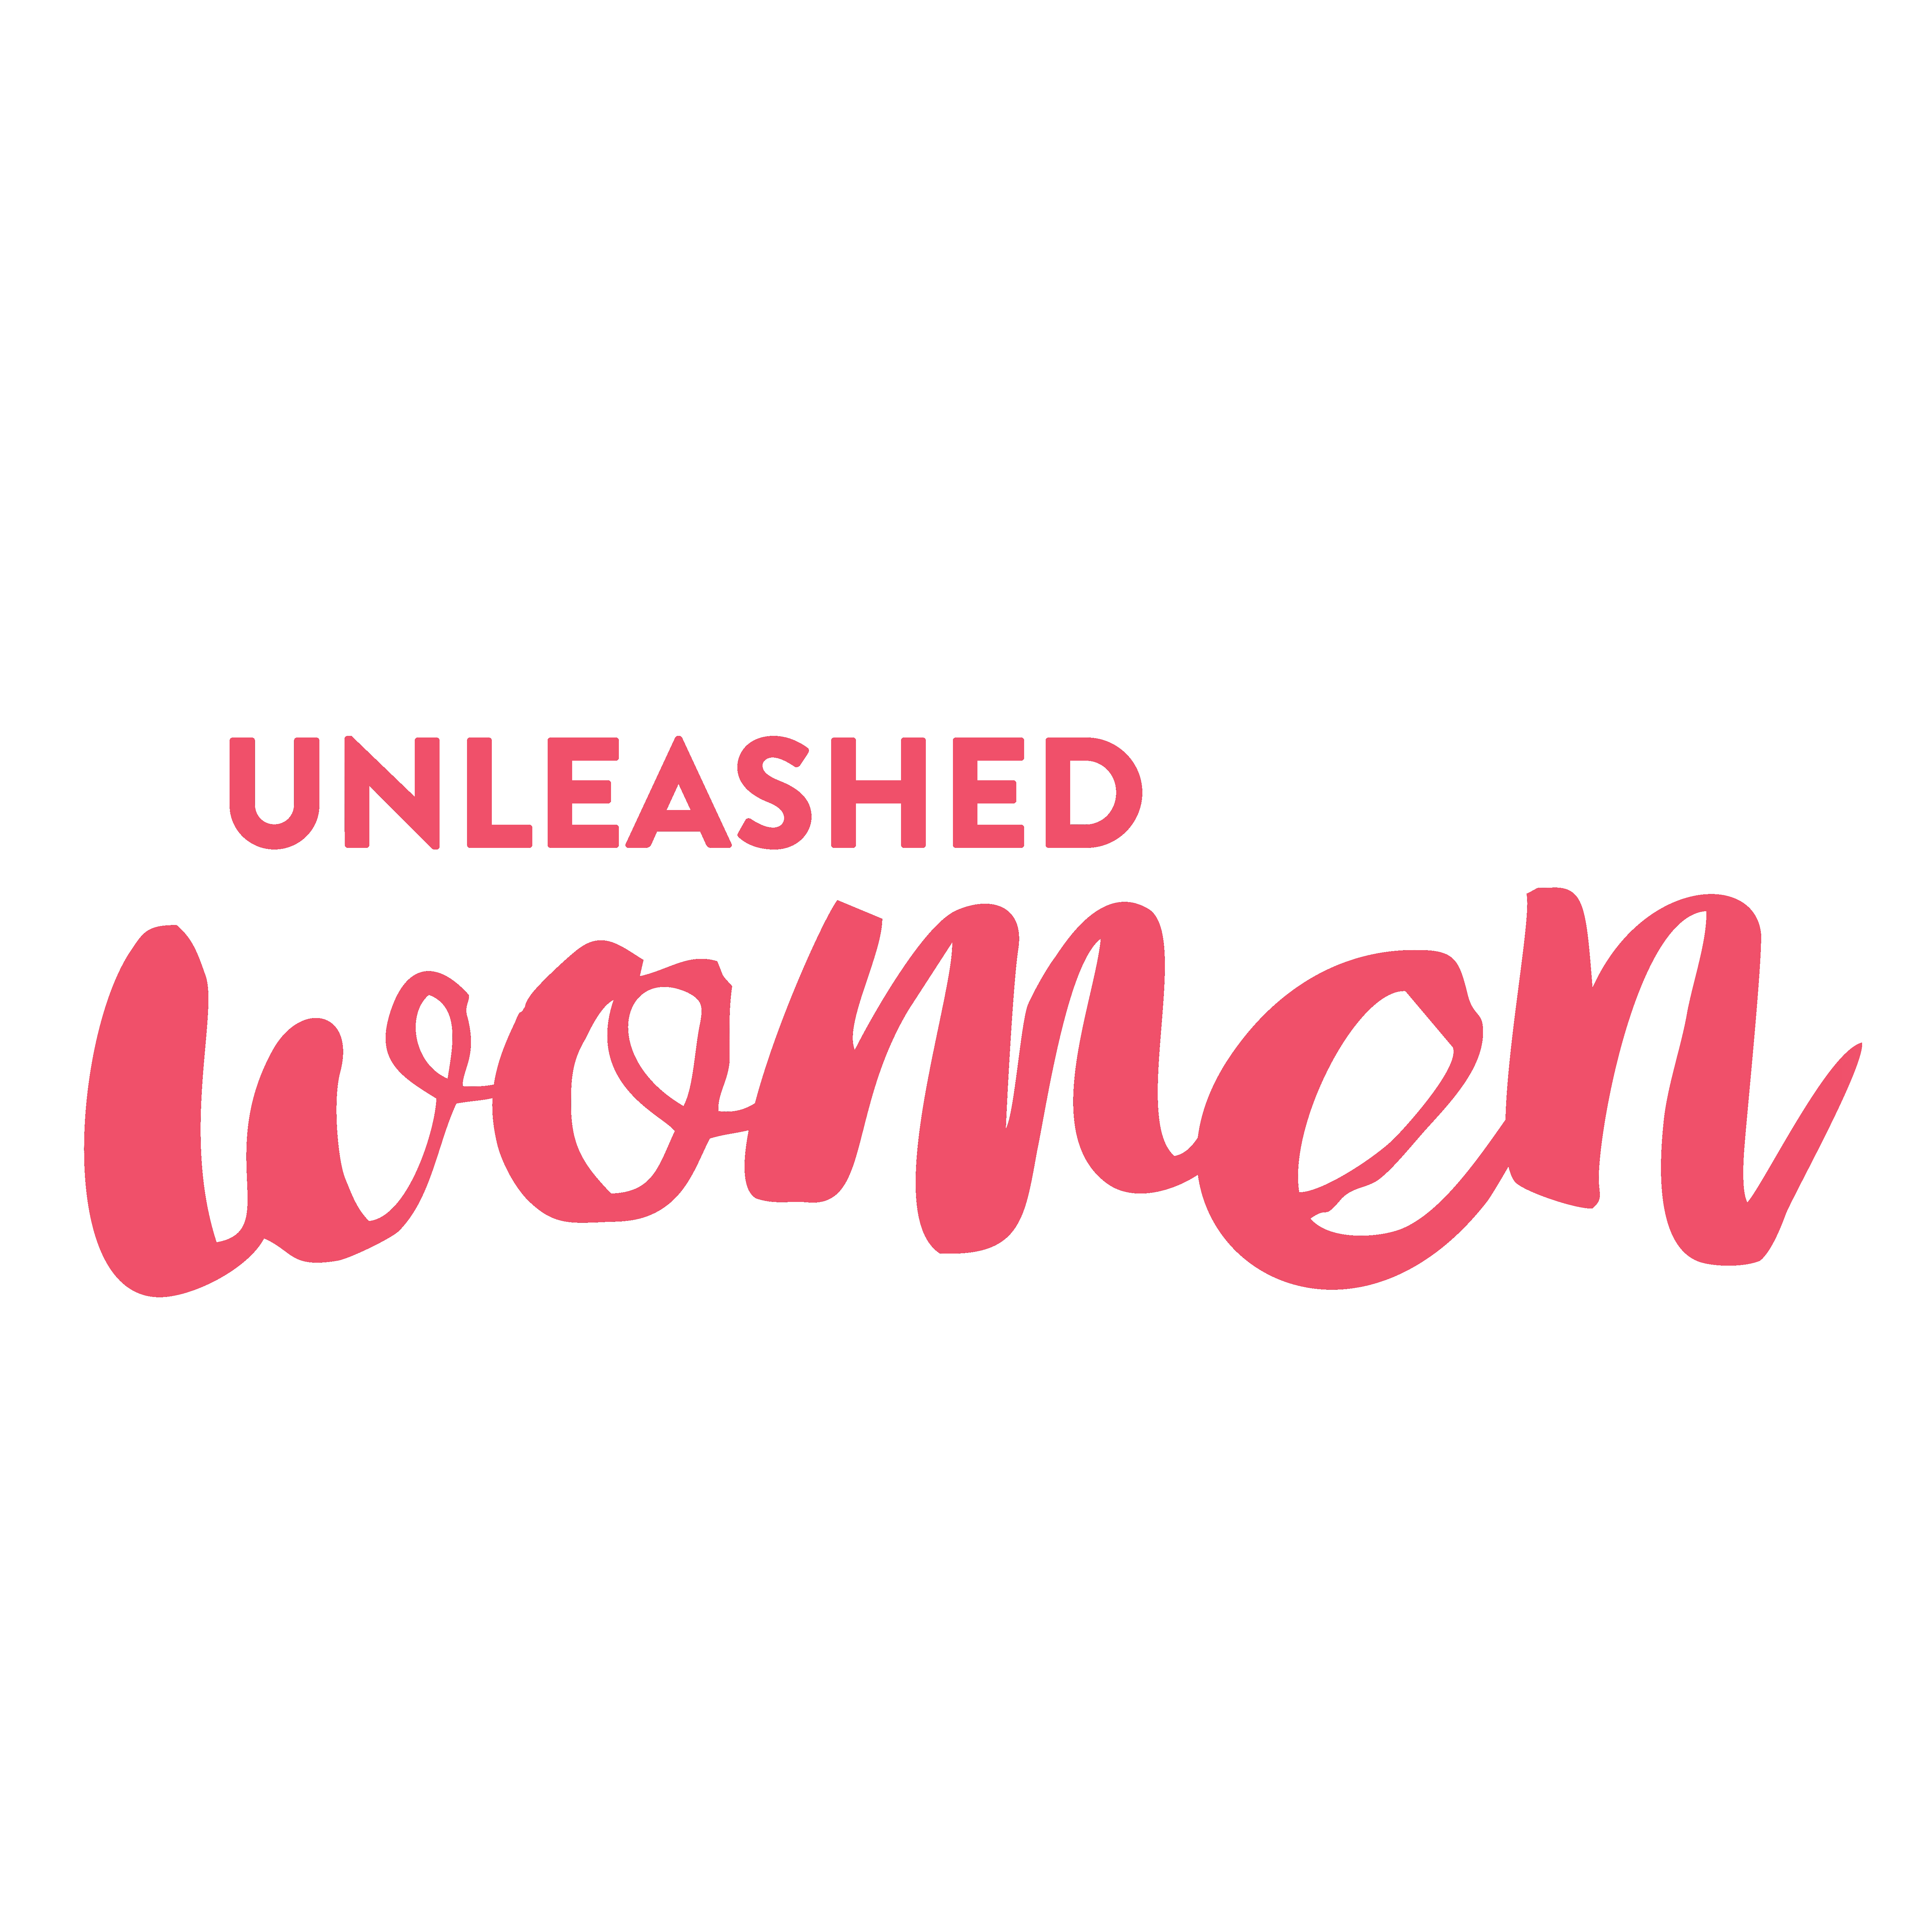 Unleashed Women leadership network